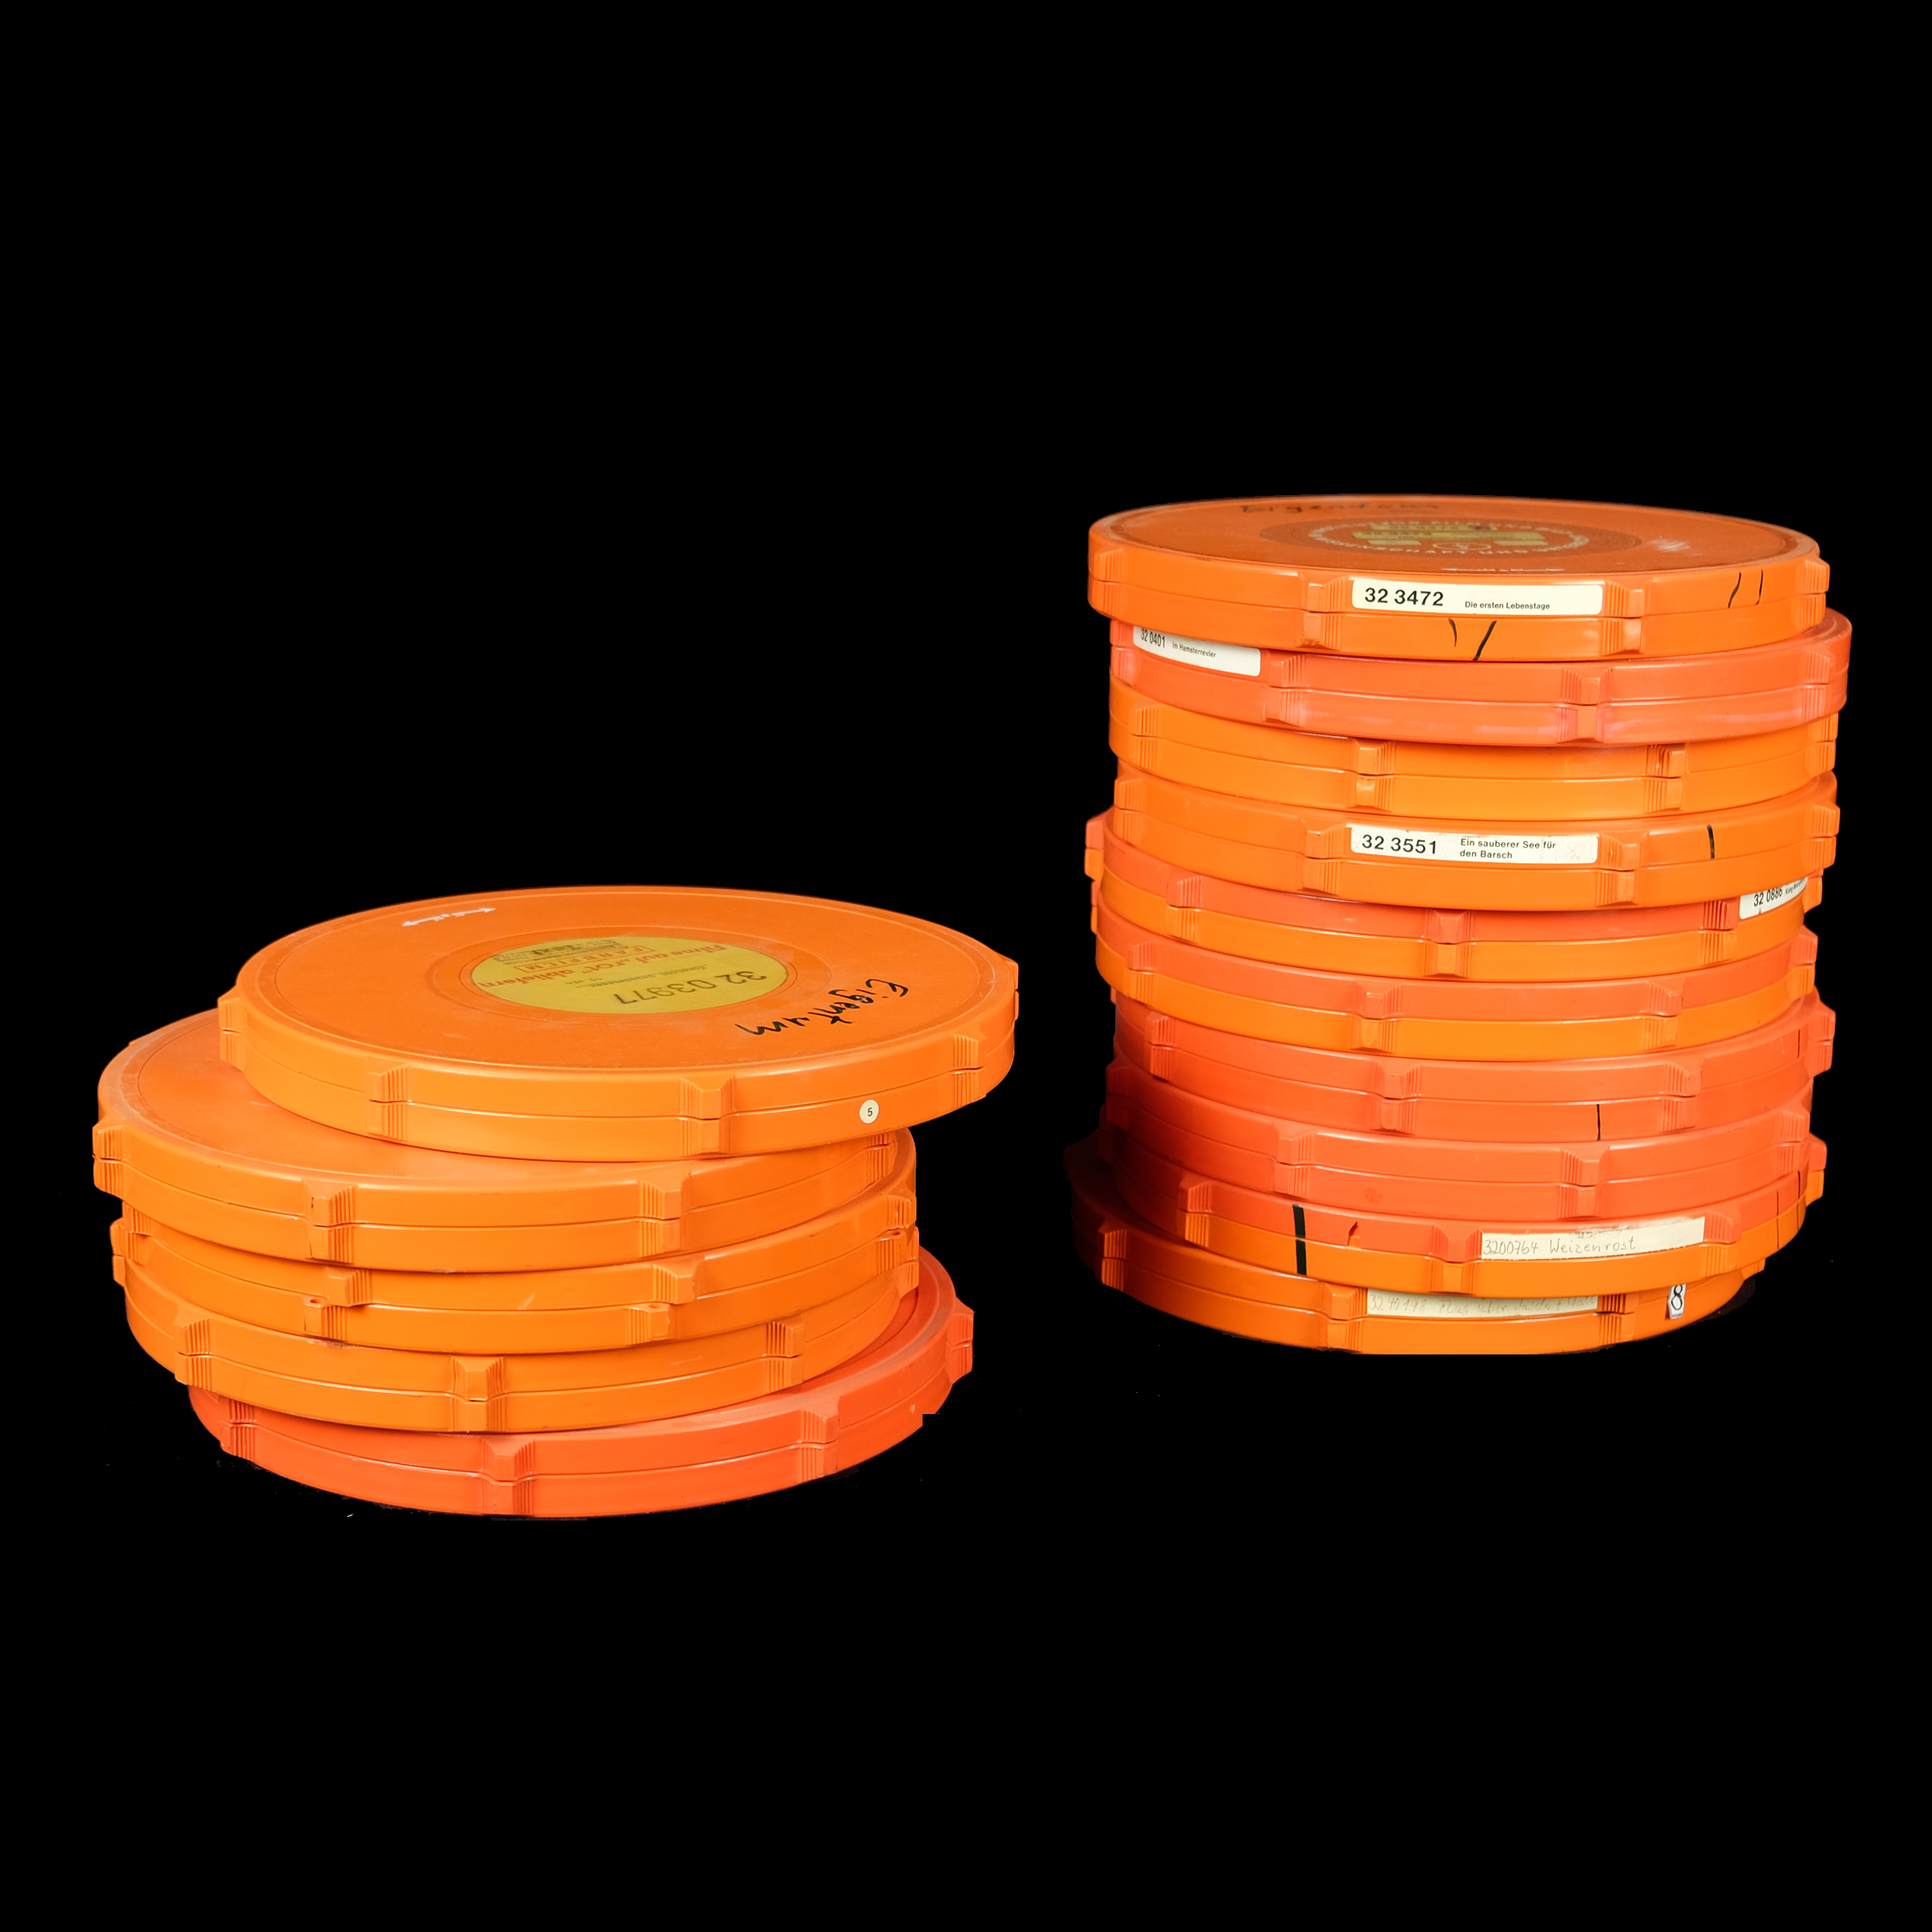 orange Filmdose